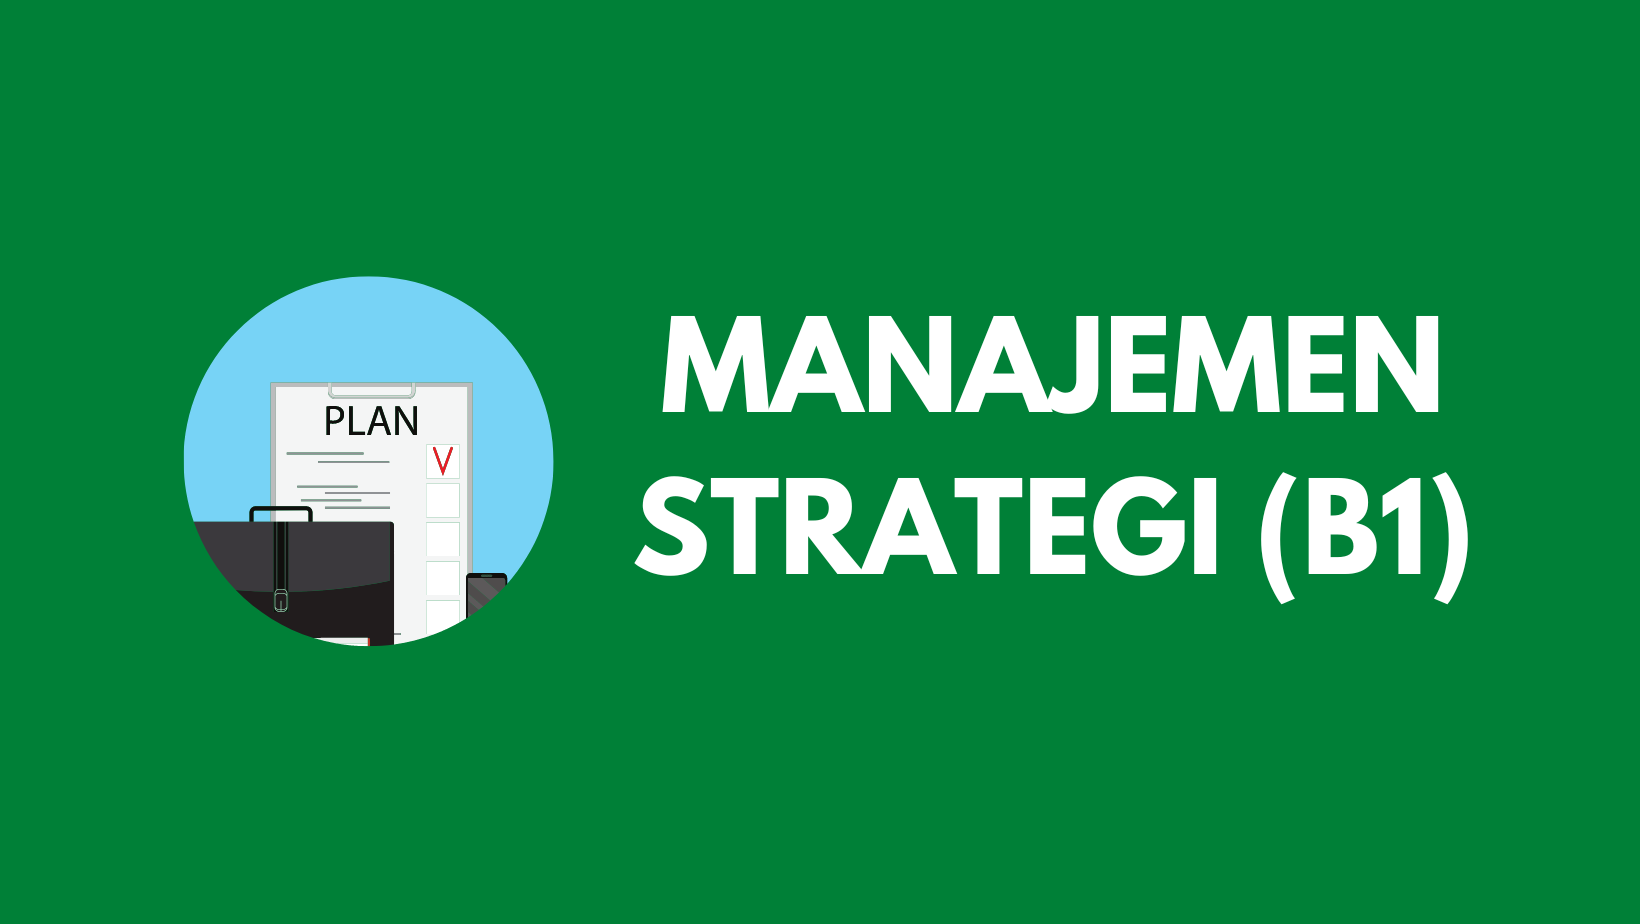 Manajemen Strategi  (B1)